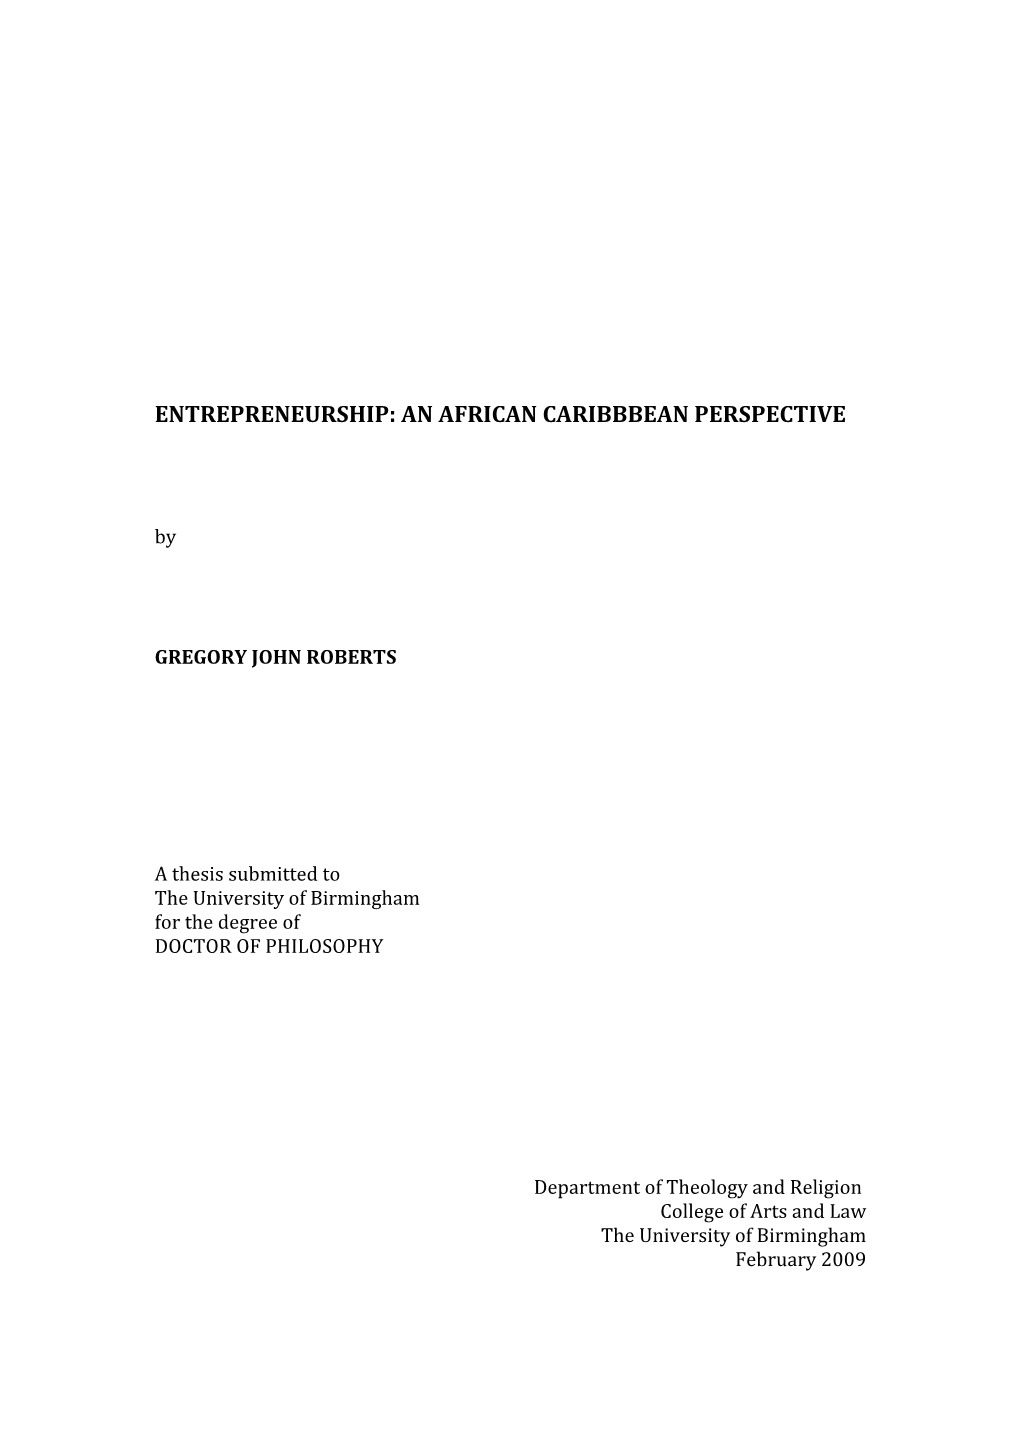 Entrepreneurship: an African Caribbbean Perspective